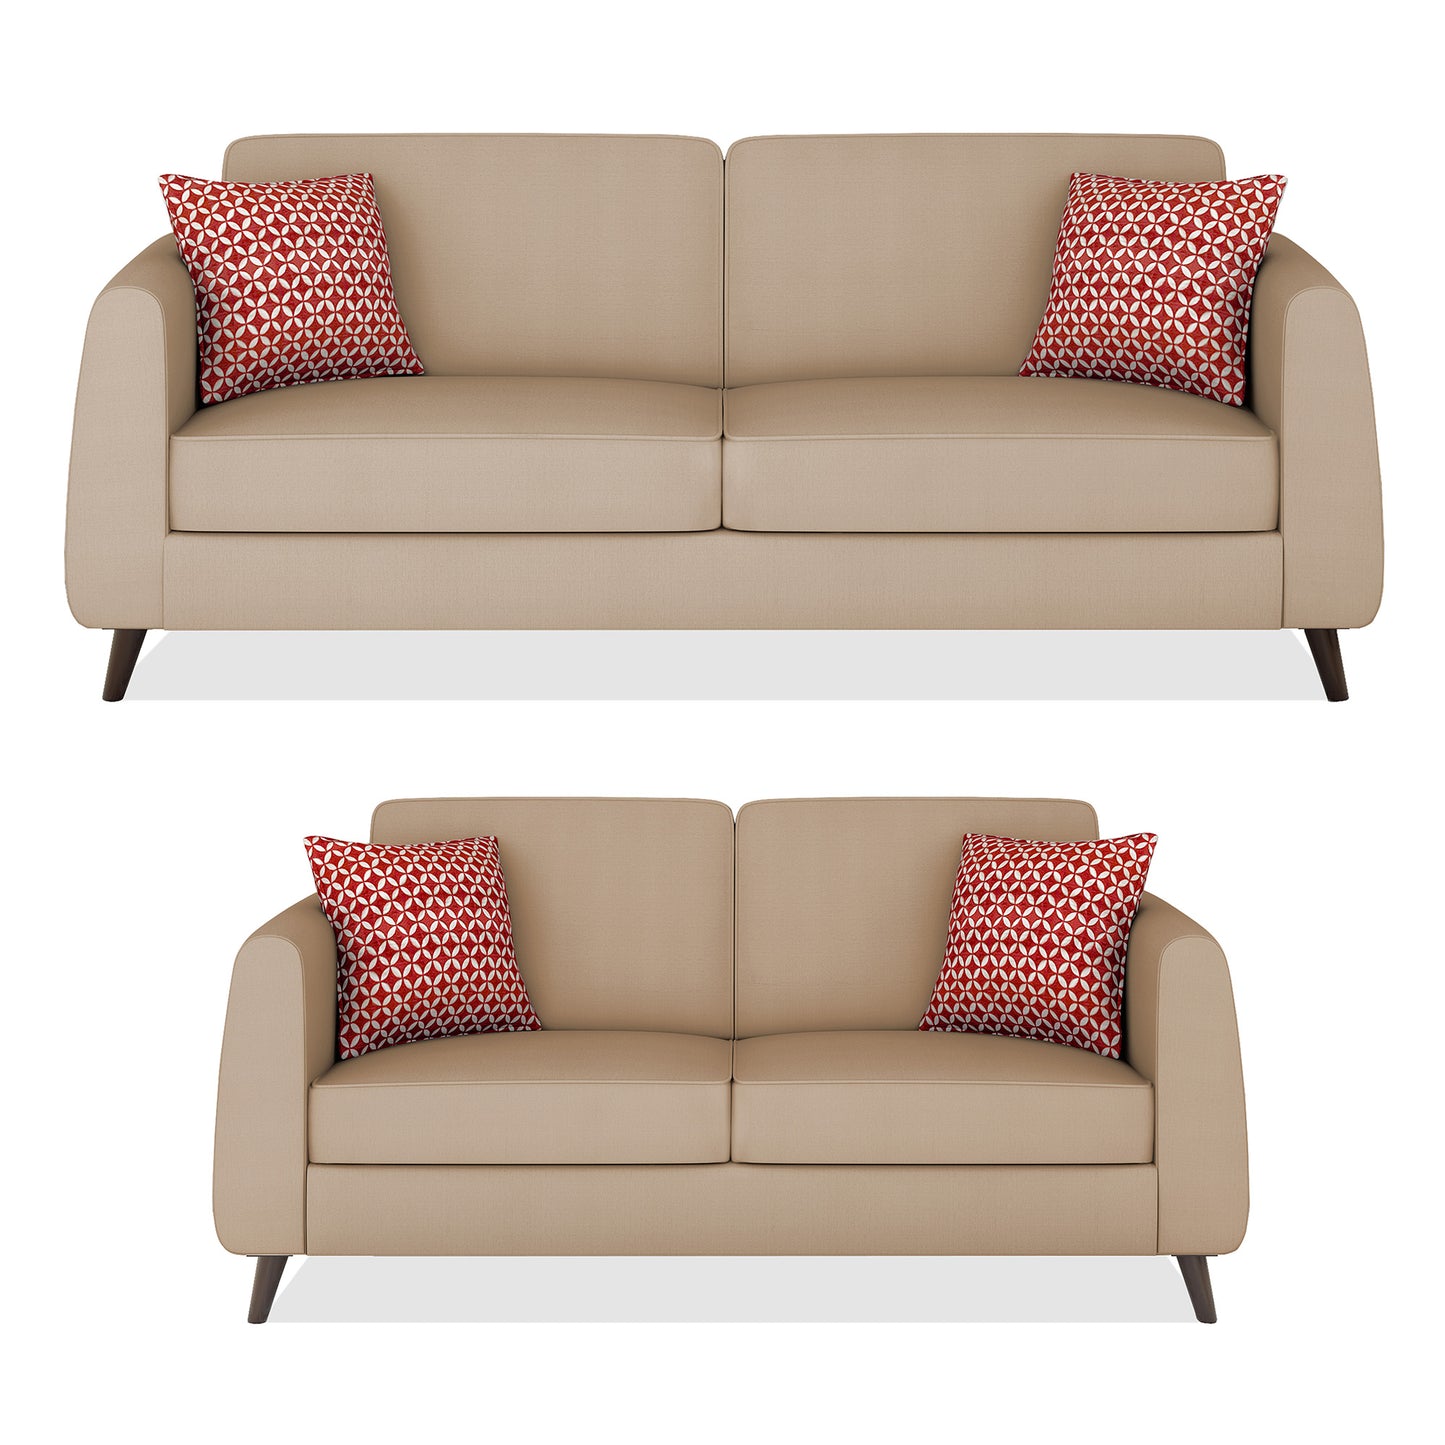 Adorn India Harlem 5 Seater 3+2 Fabric Sofa Set (Beige)